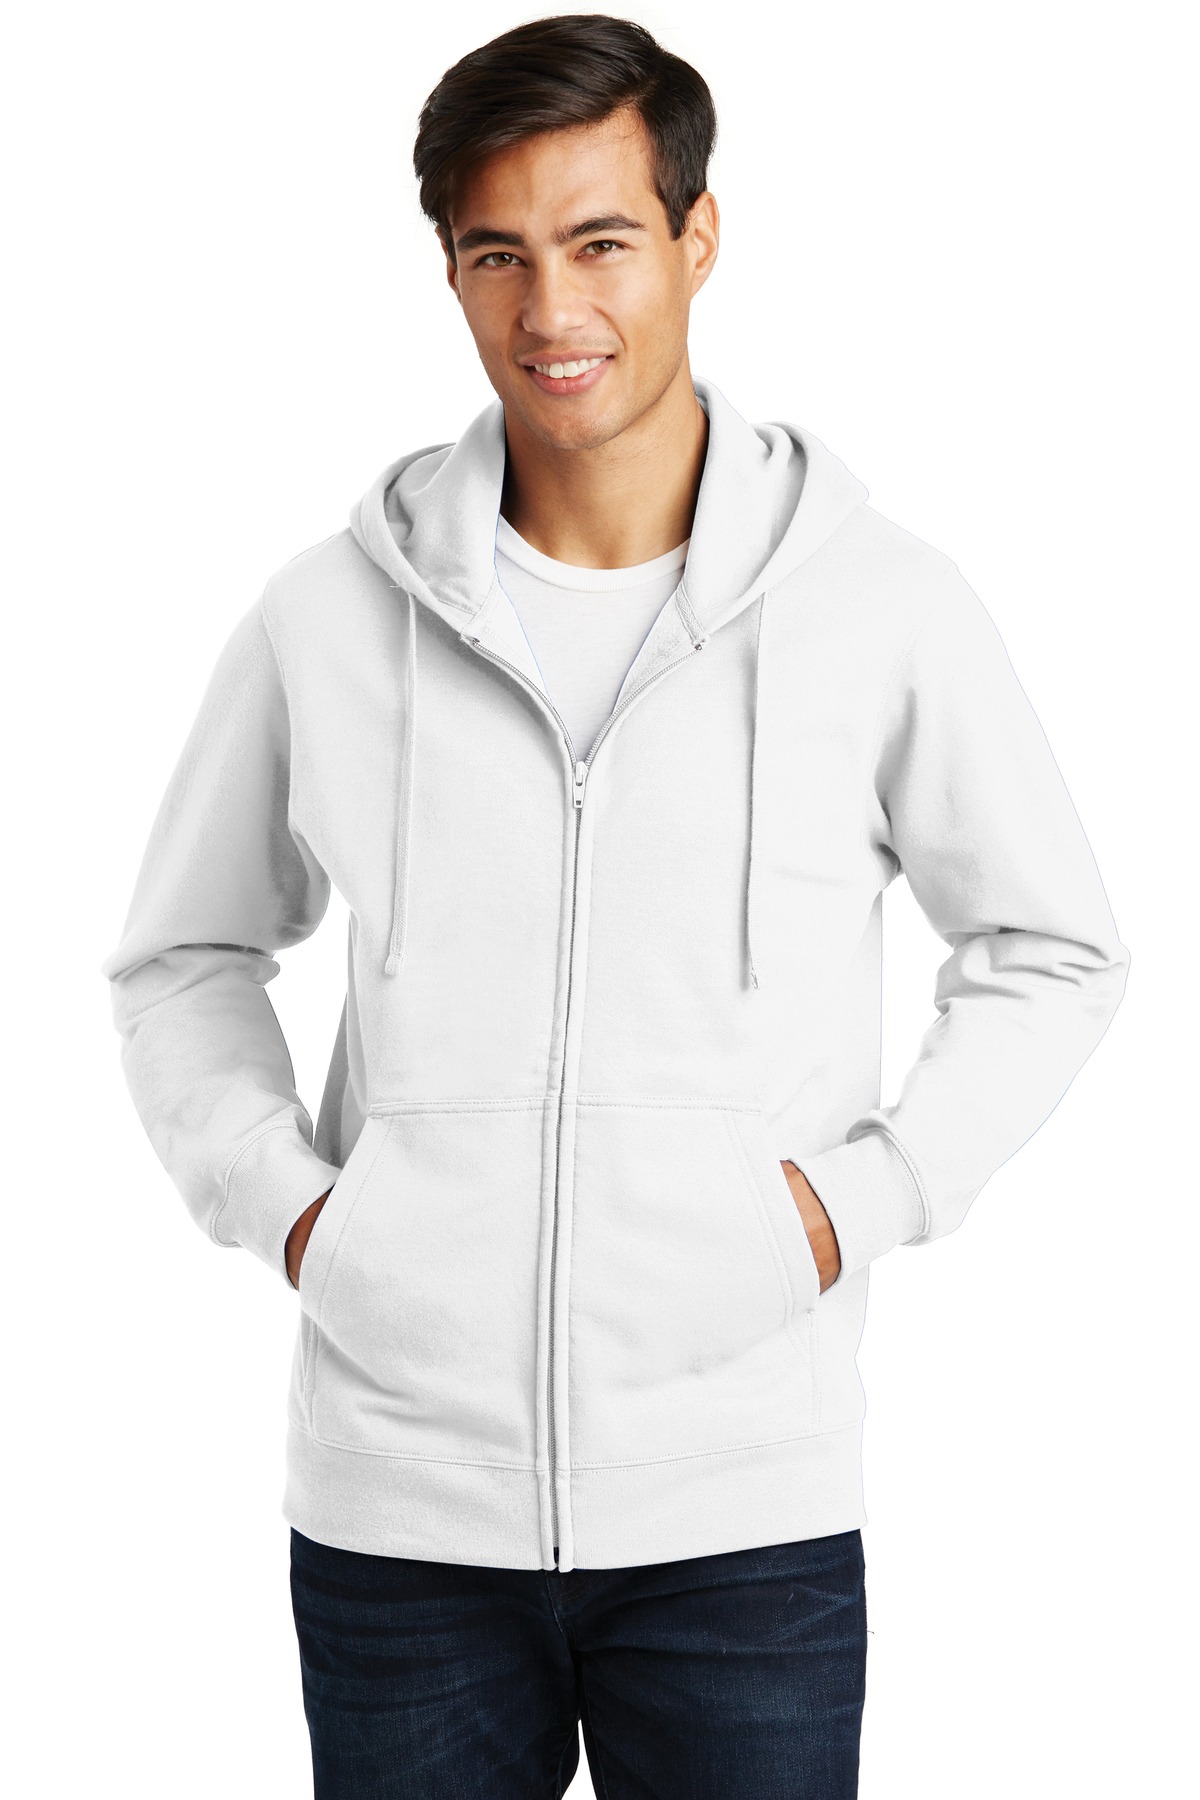 Port & Company Hospitality Sweatshirts & Fleece ® Fan Favorite Fleece Full-Zip Hooded Sweatshirt.-Port & Company